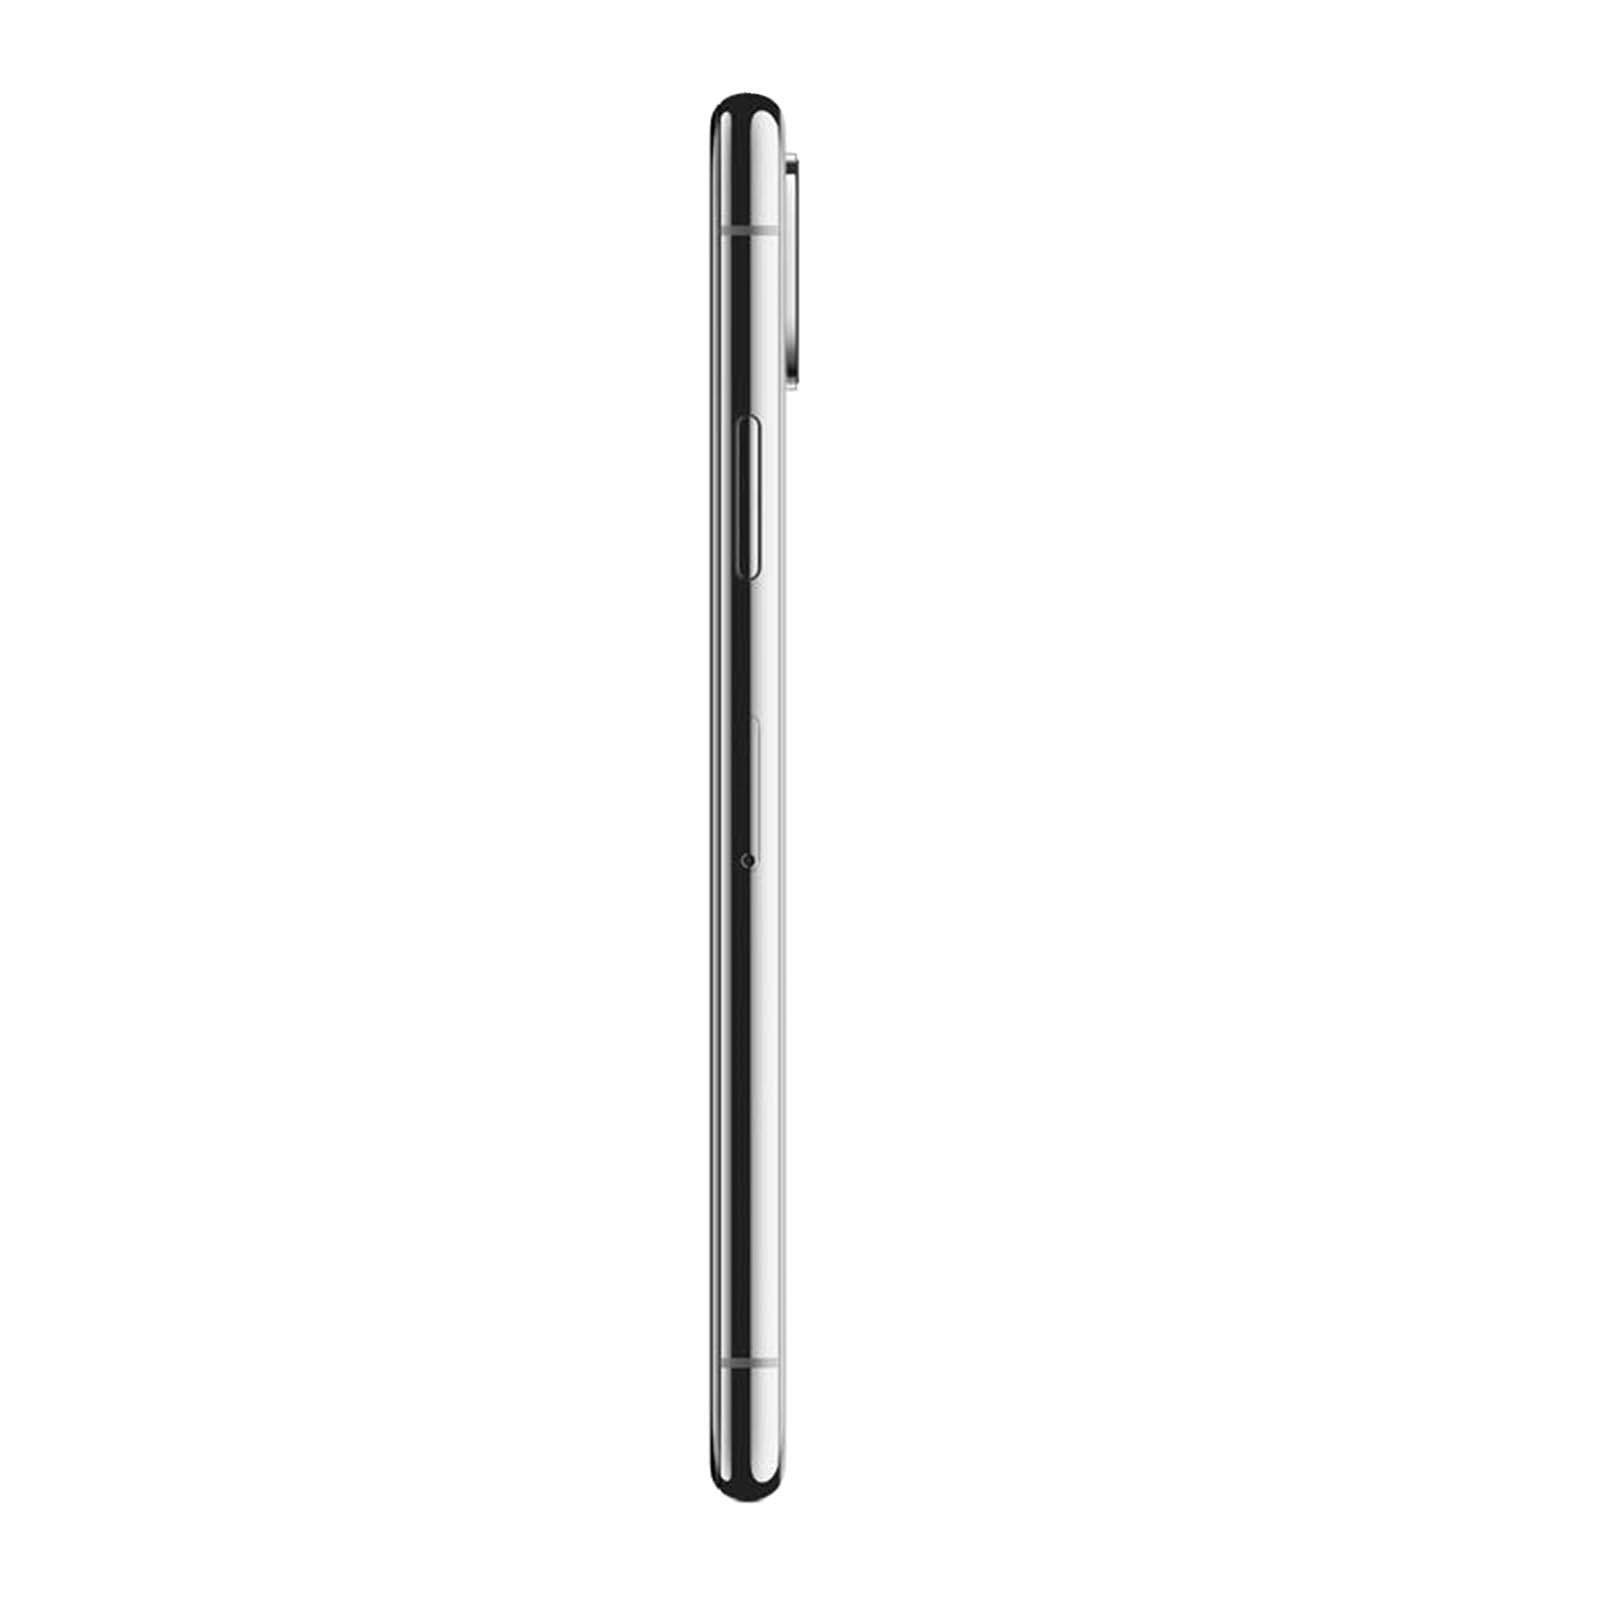 Apple iPhone XS Max 256GB Silver Good - Unlocked